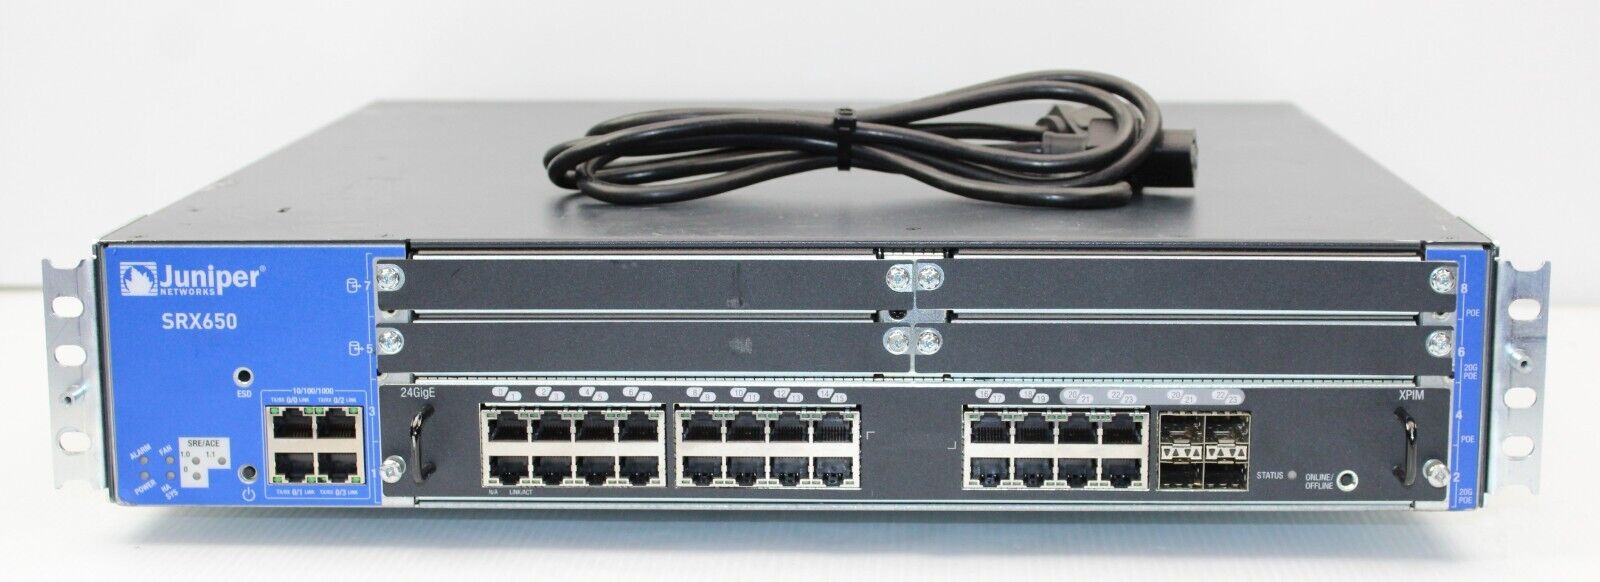 Juniper | SRX650 | Service Gateway Firewall With 24GigE-POE XPIM Module & SRE 6